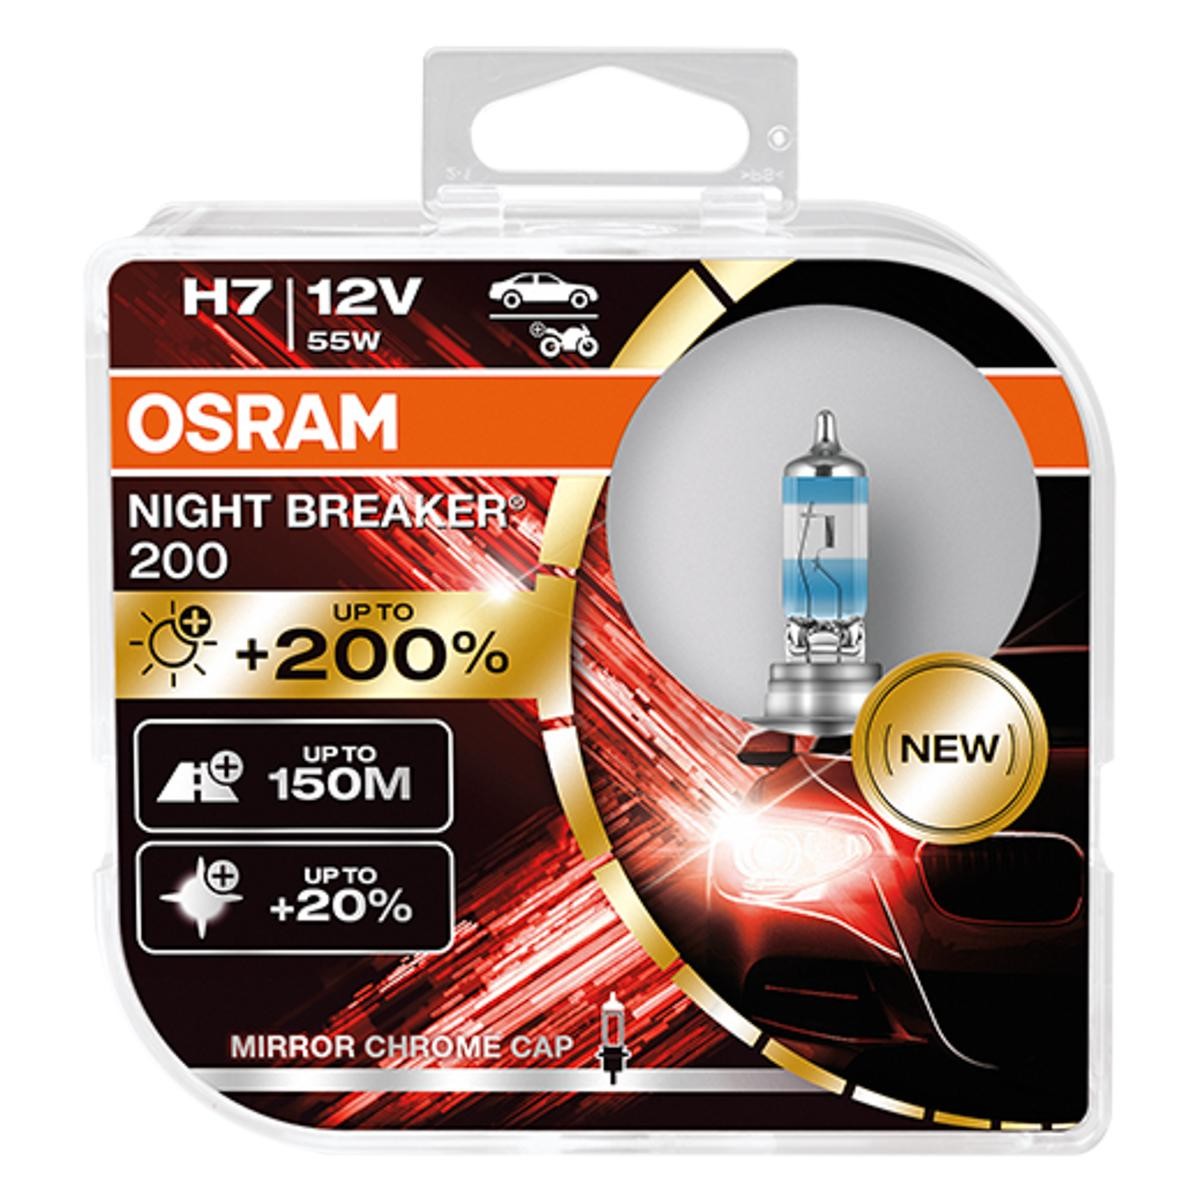 64210NB200-HCB OSRAM NIGHT BREAKER 200 H7 12V 55W PX26d, 3700K, Halogen  Lyspære, fjernlys